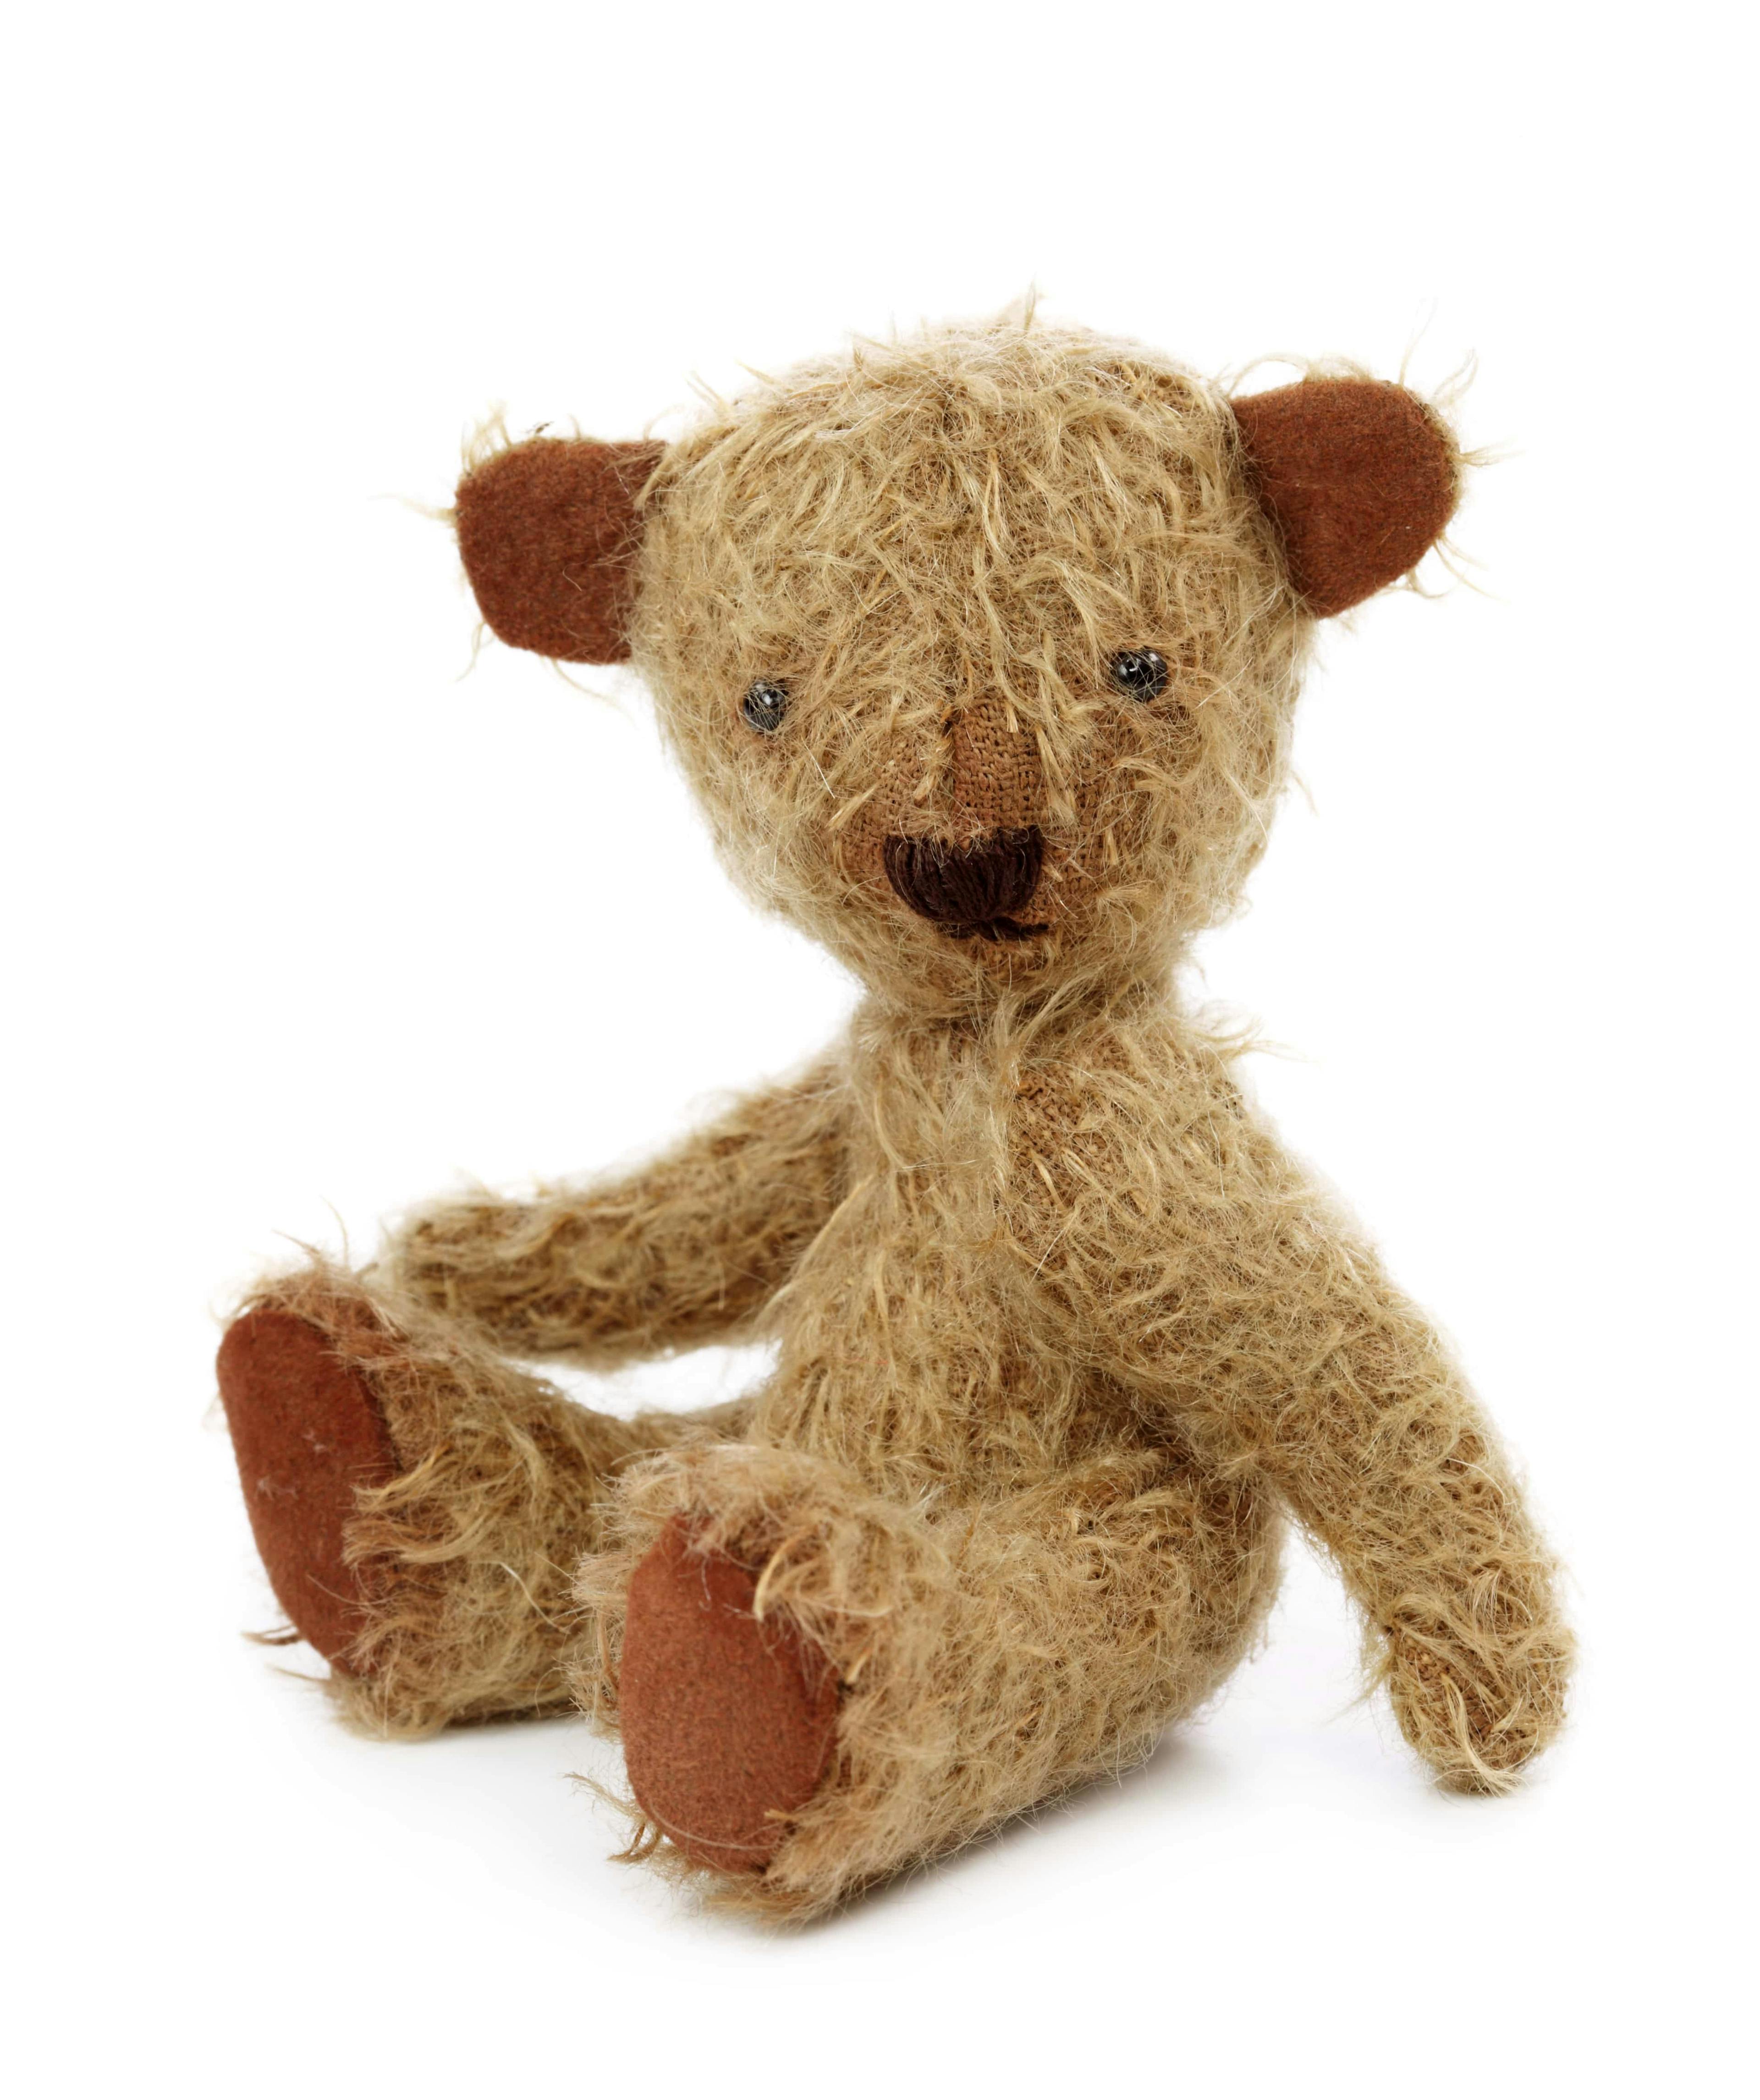 image of teddy bear